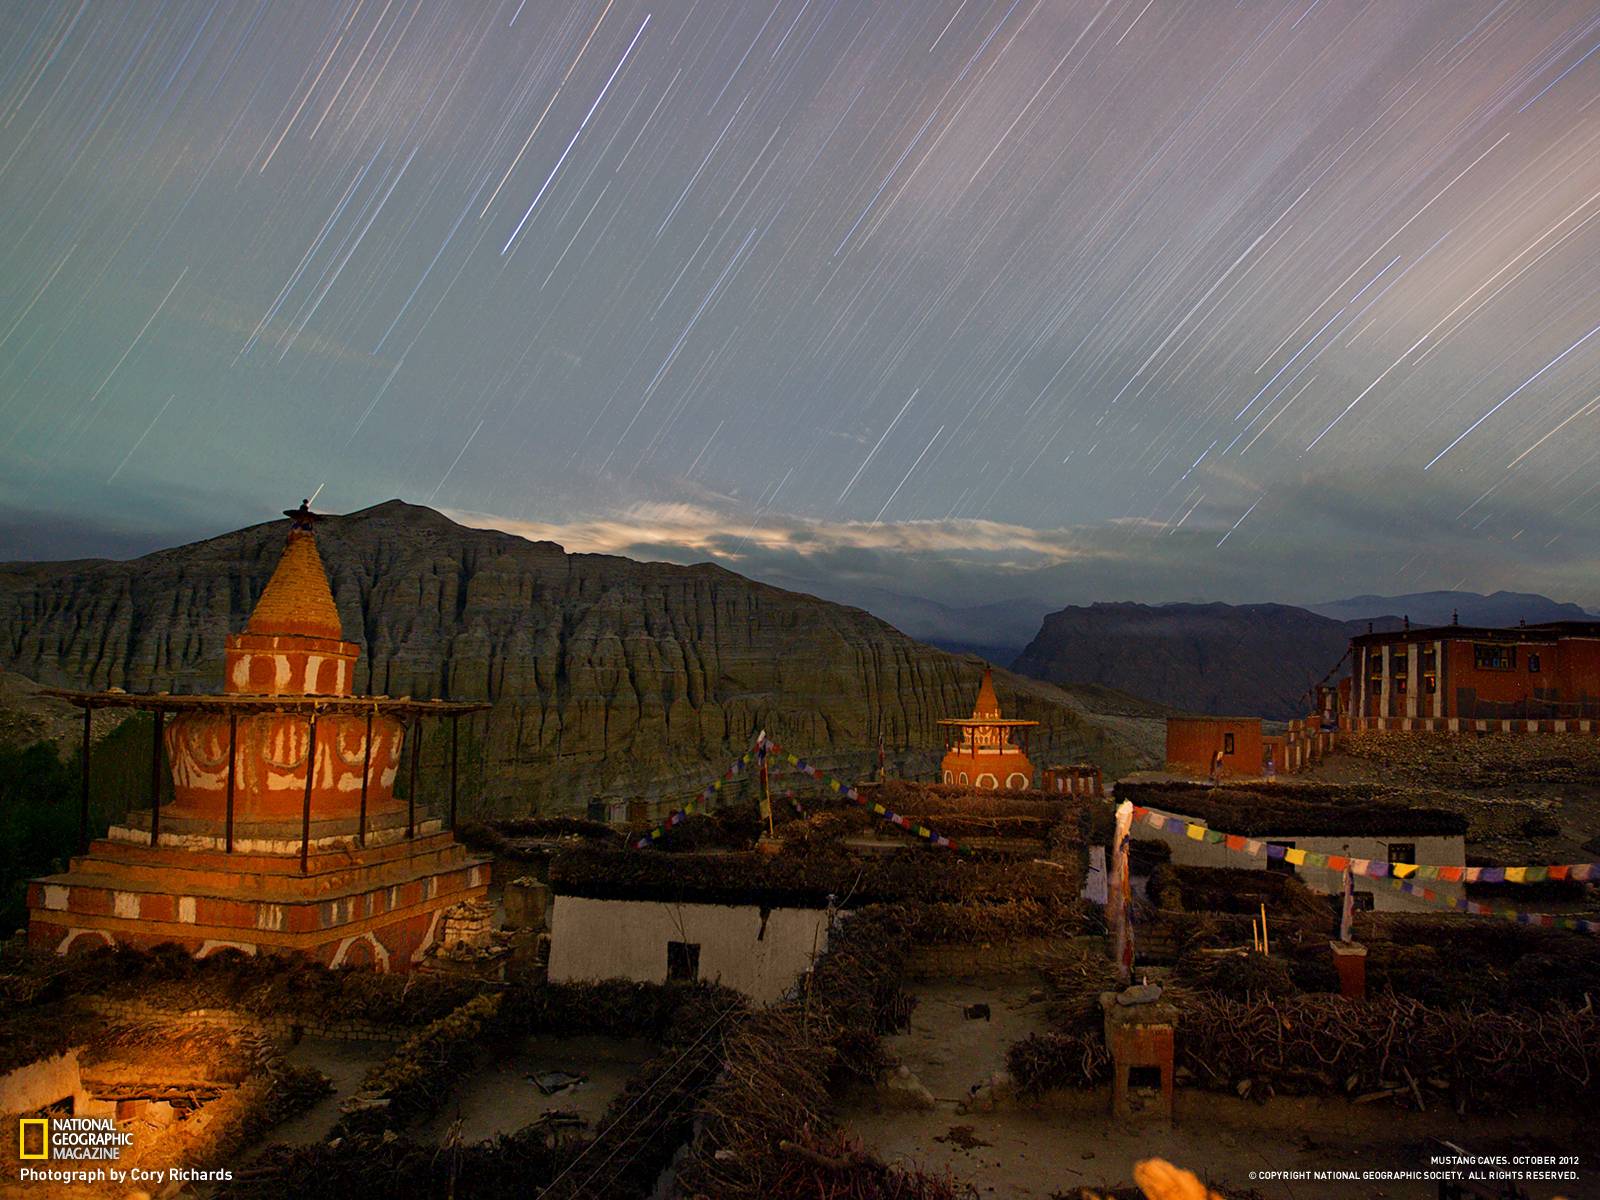 Tsarang Picture - Nepal Wallpaper - National Geographic Photo